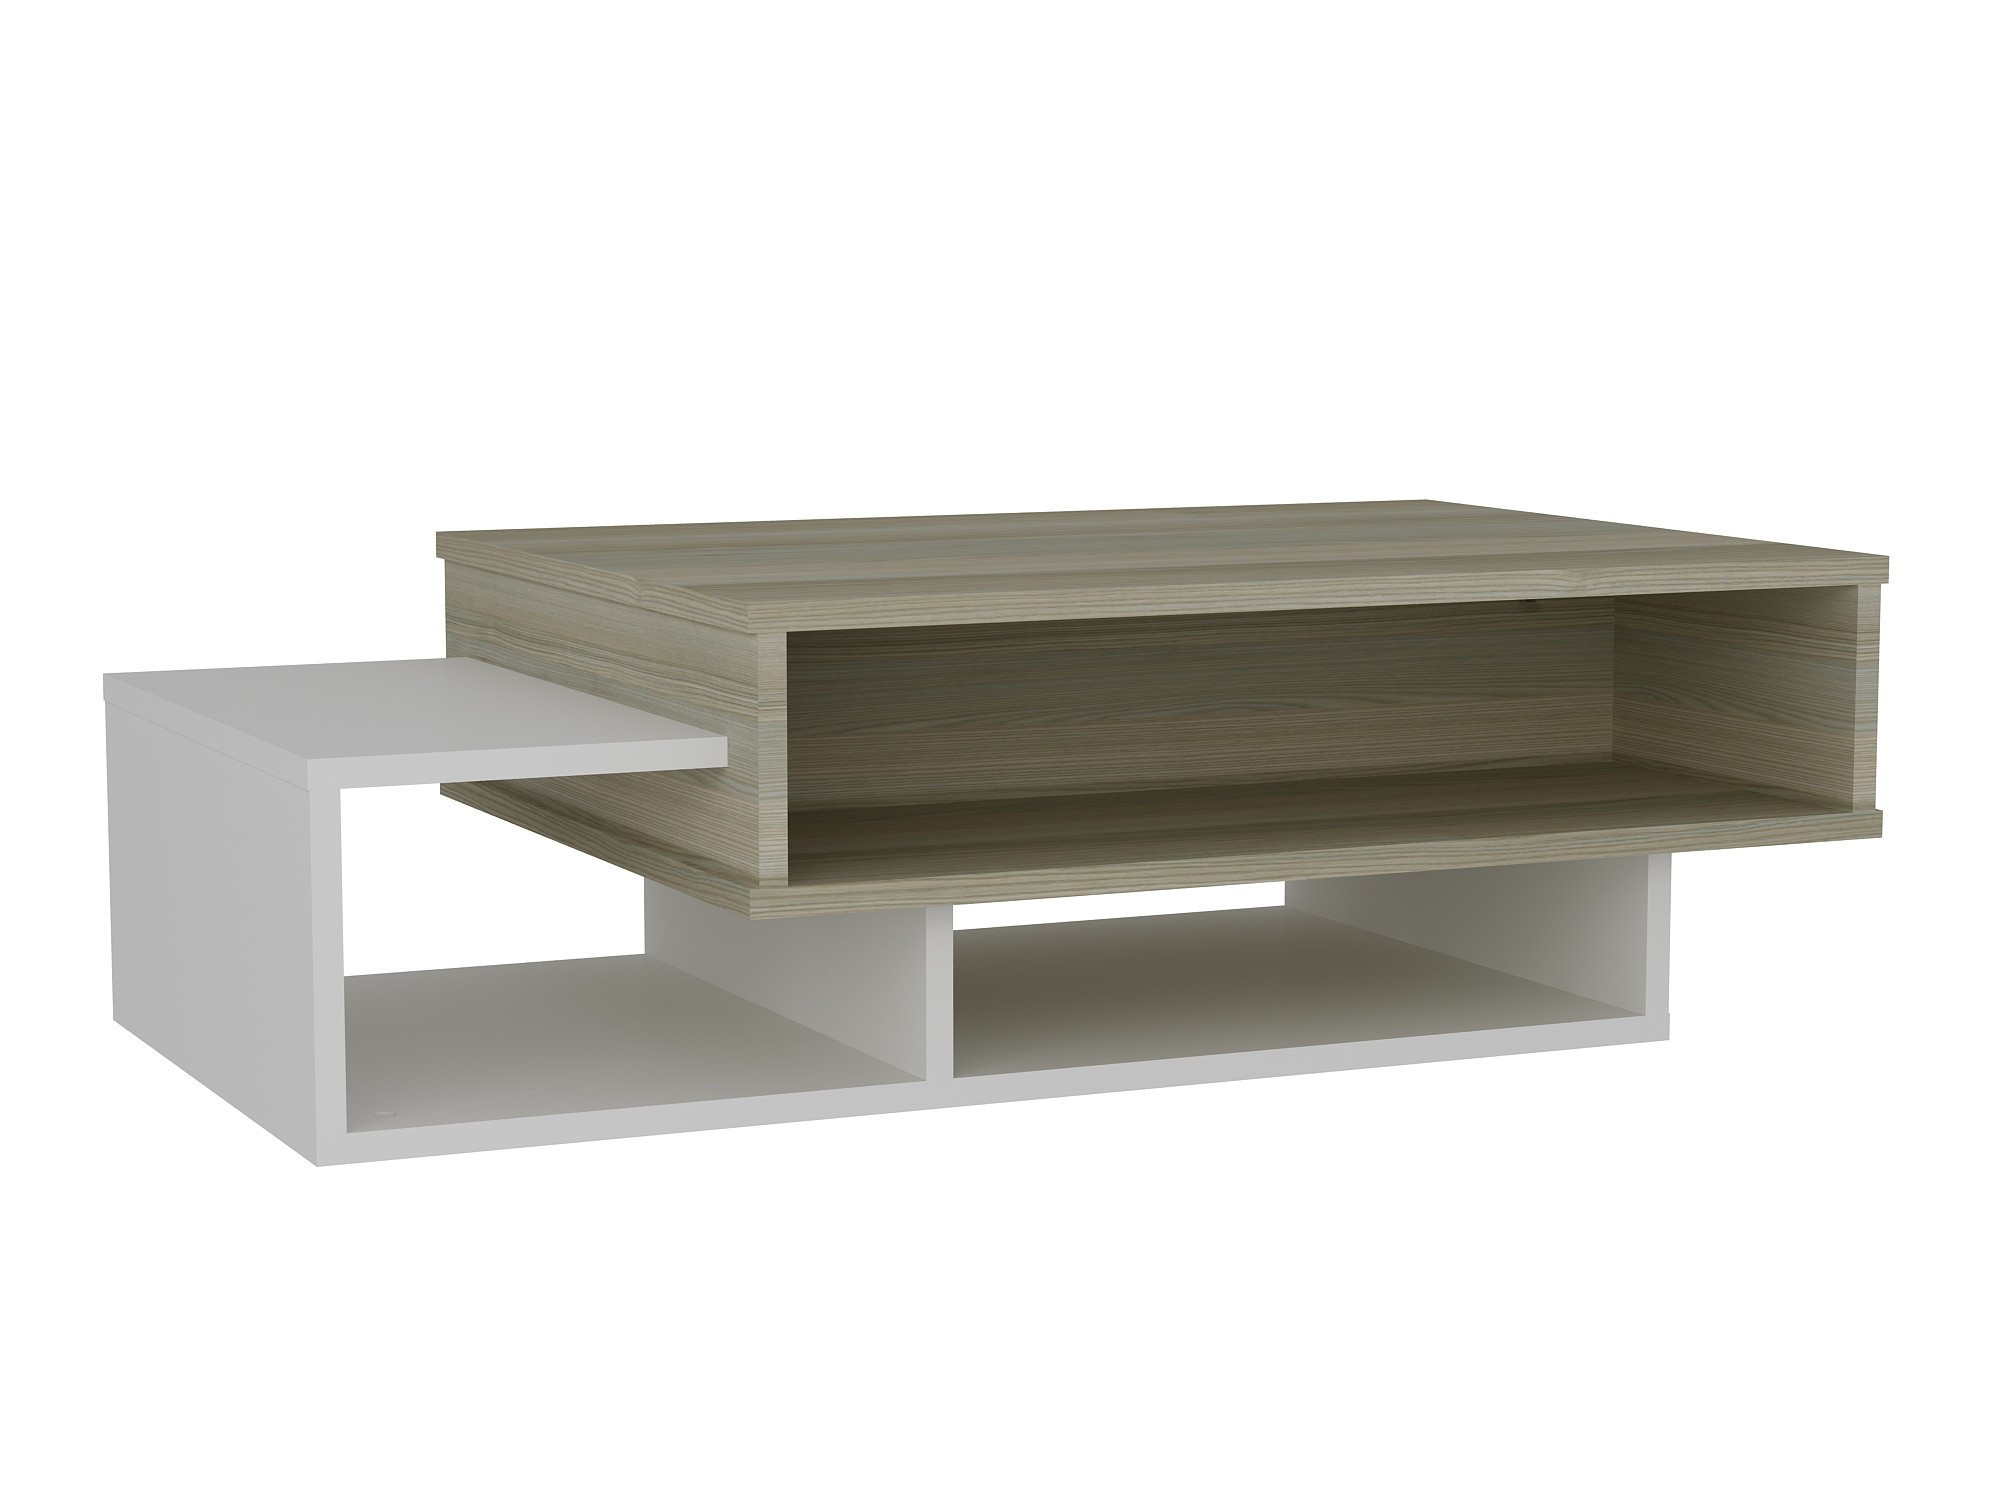 Tavolino asimmetrico Superimposita in melamina bianca e legno